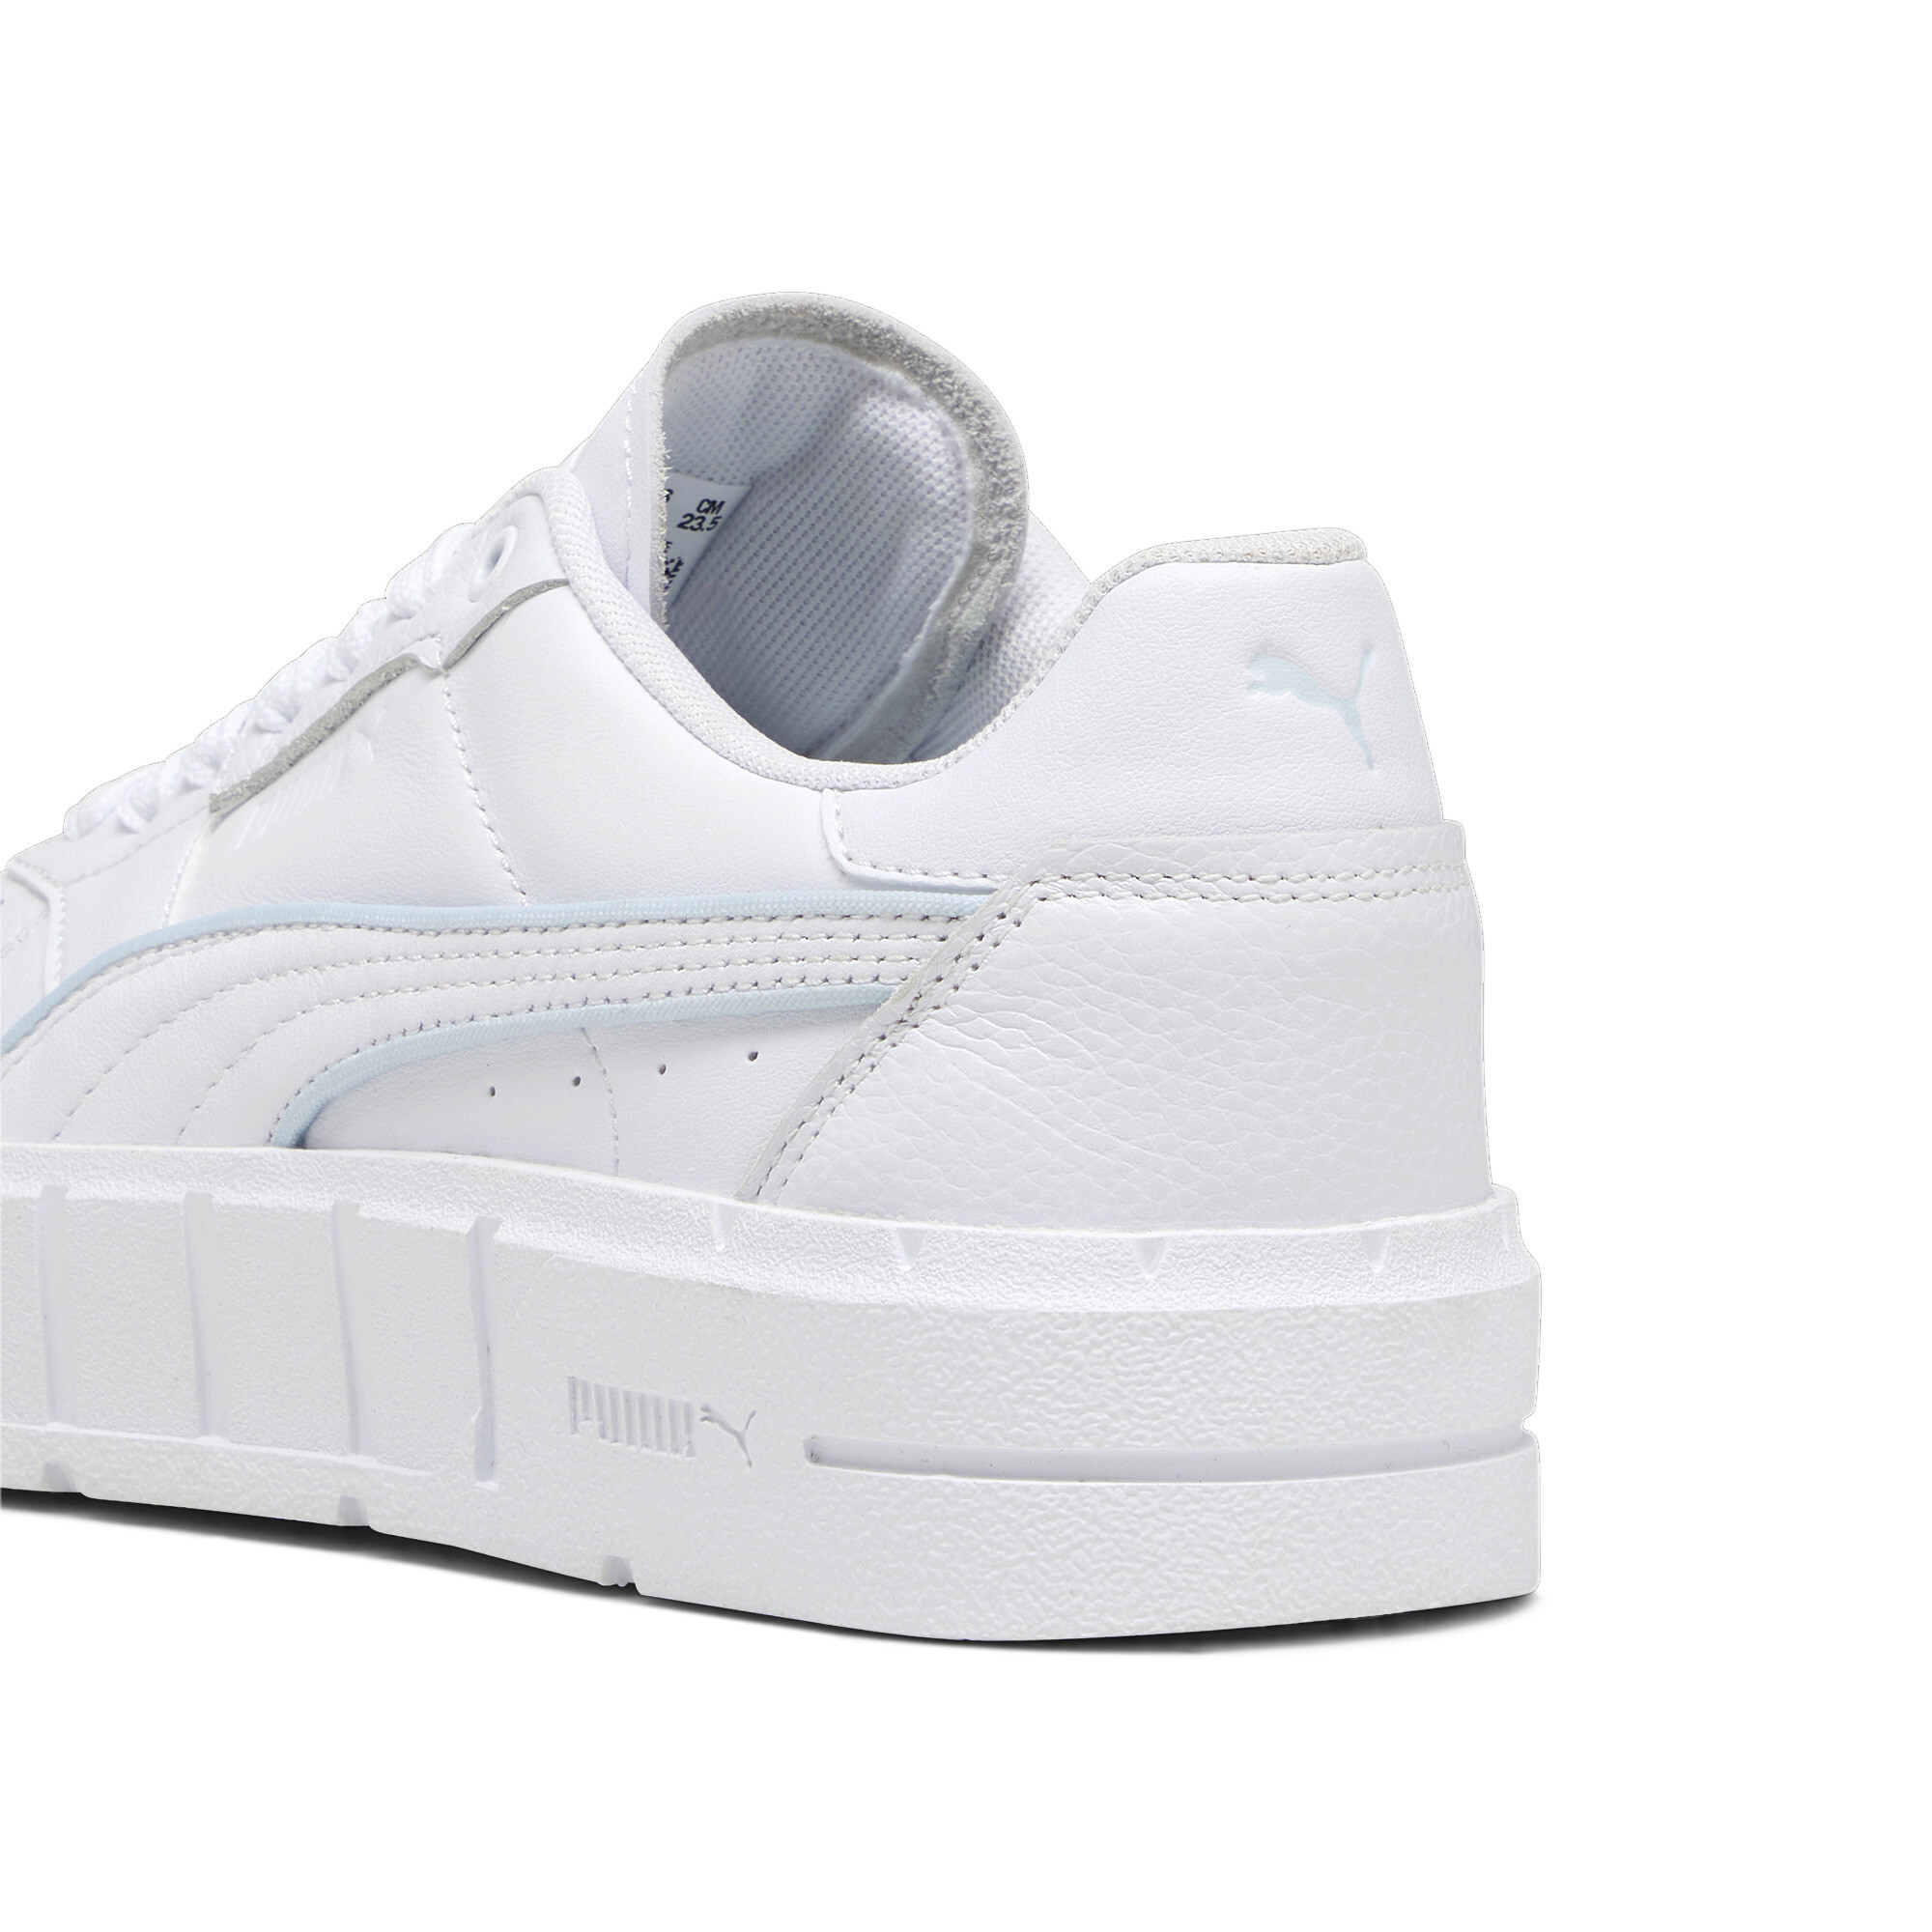 Women's Puma Cali Court Pop's Sneakers, White, Size 35.5, Shoes